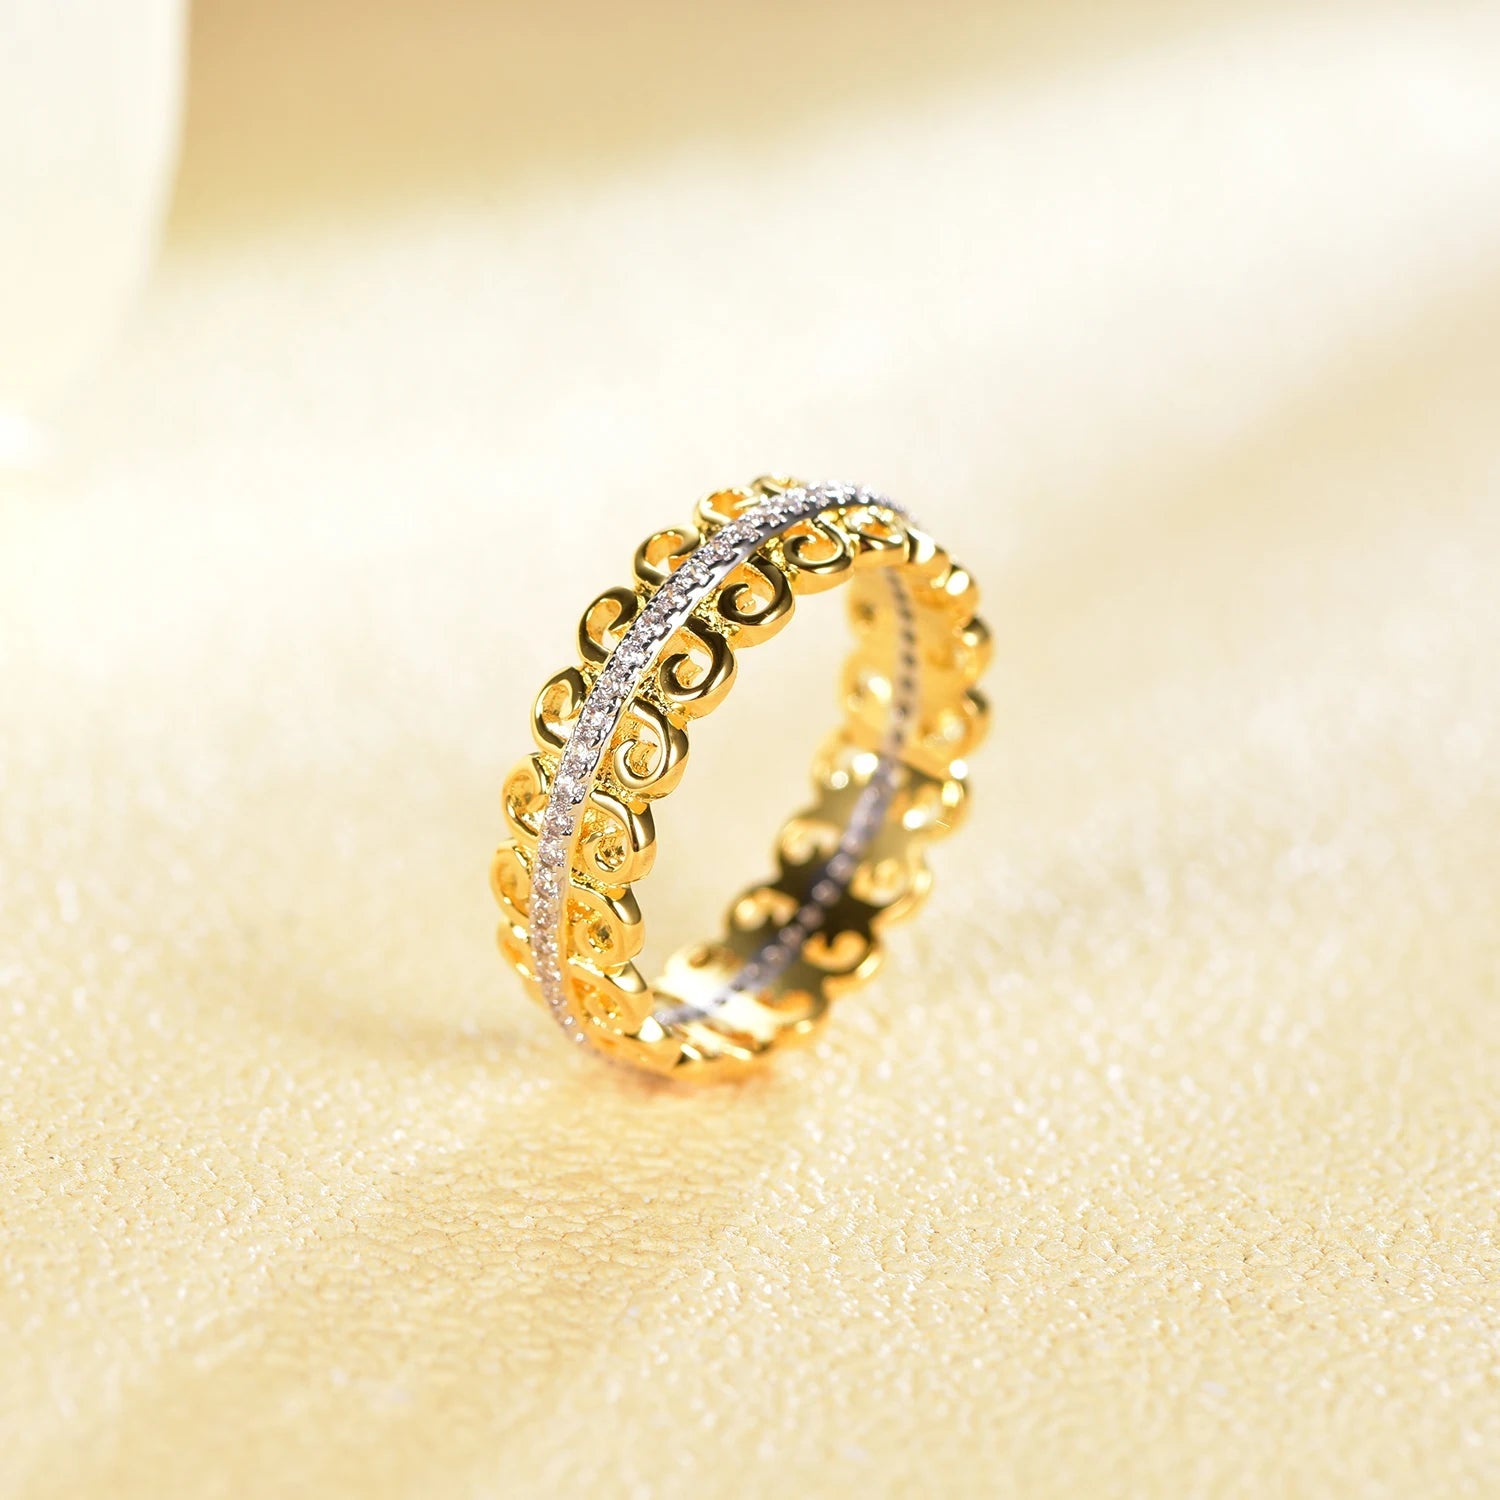 Hot Selling 14&18K Plated Jewelry Design Jewelry Gold Wedding Woman Man Ring Gold Wedding Fashion Woman Jewelry Ring Kirin Jewelry